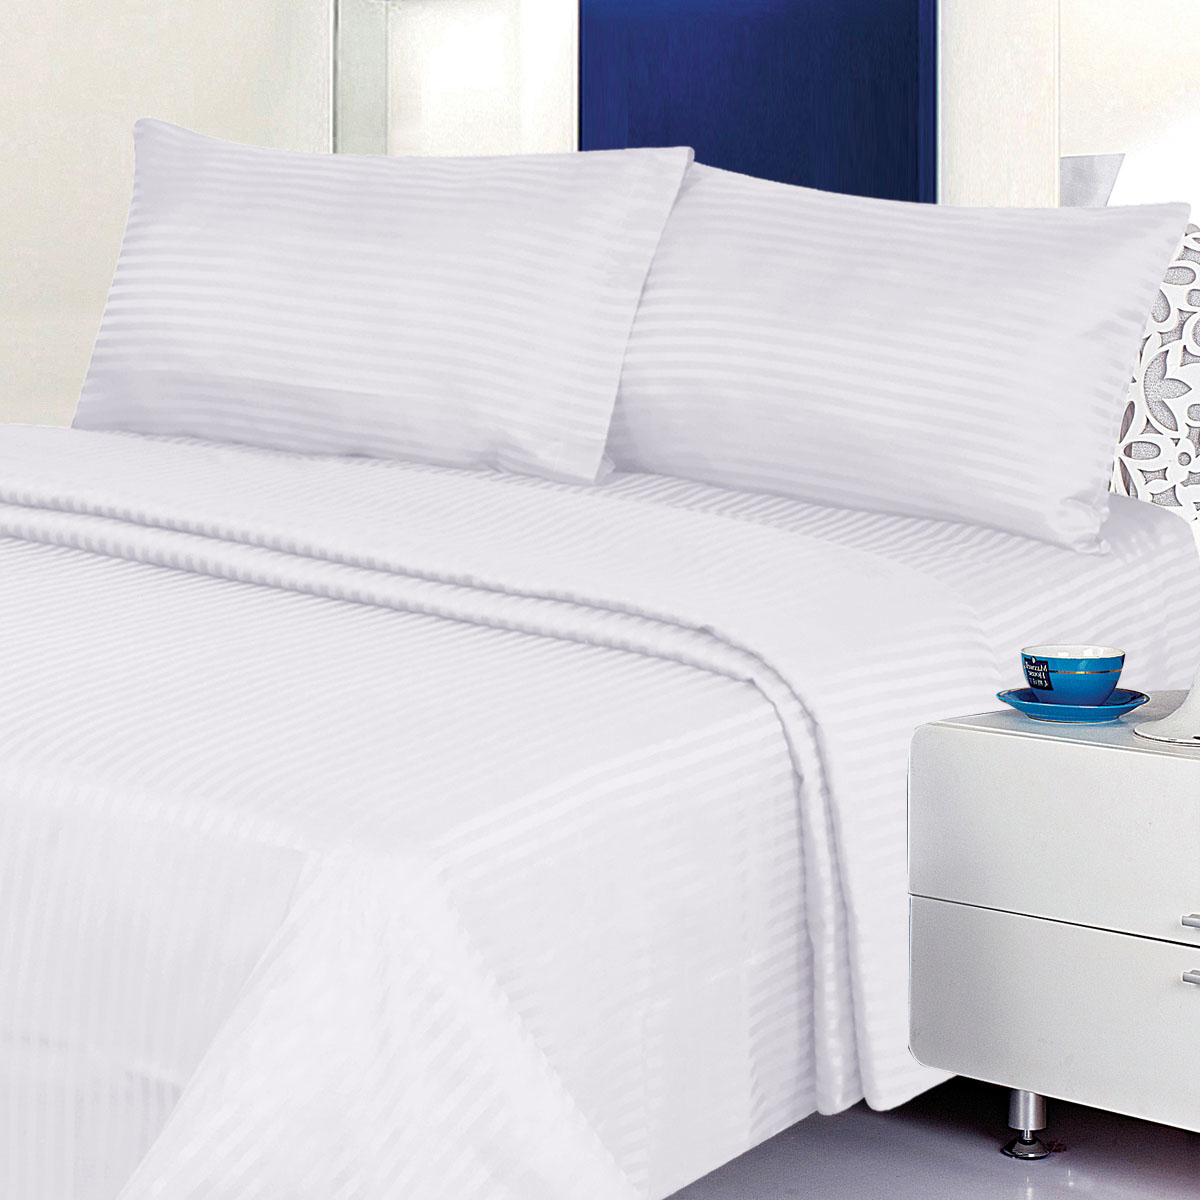 Deluxe 6PC Classic Cotton-Blend Sateen Dobby Stripe Bed Sheet Set - Full, White